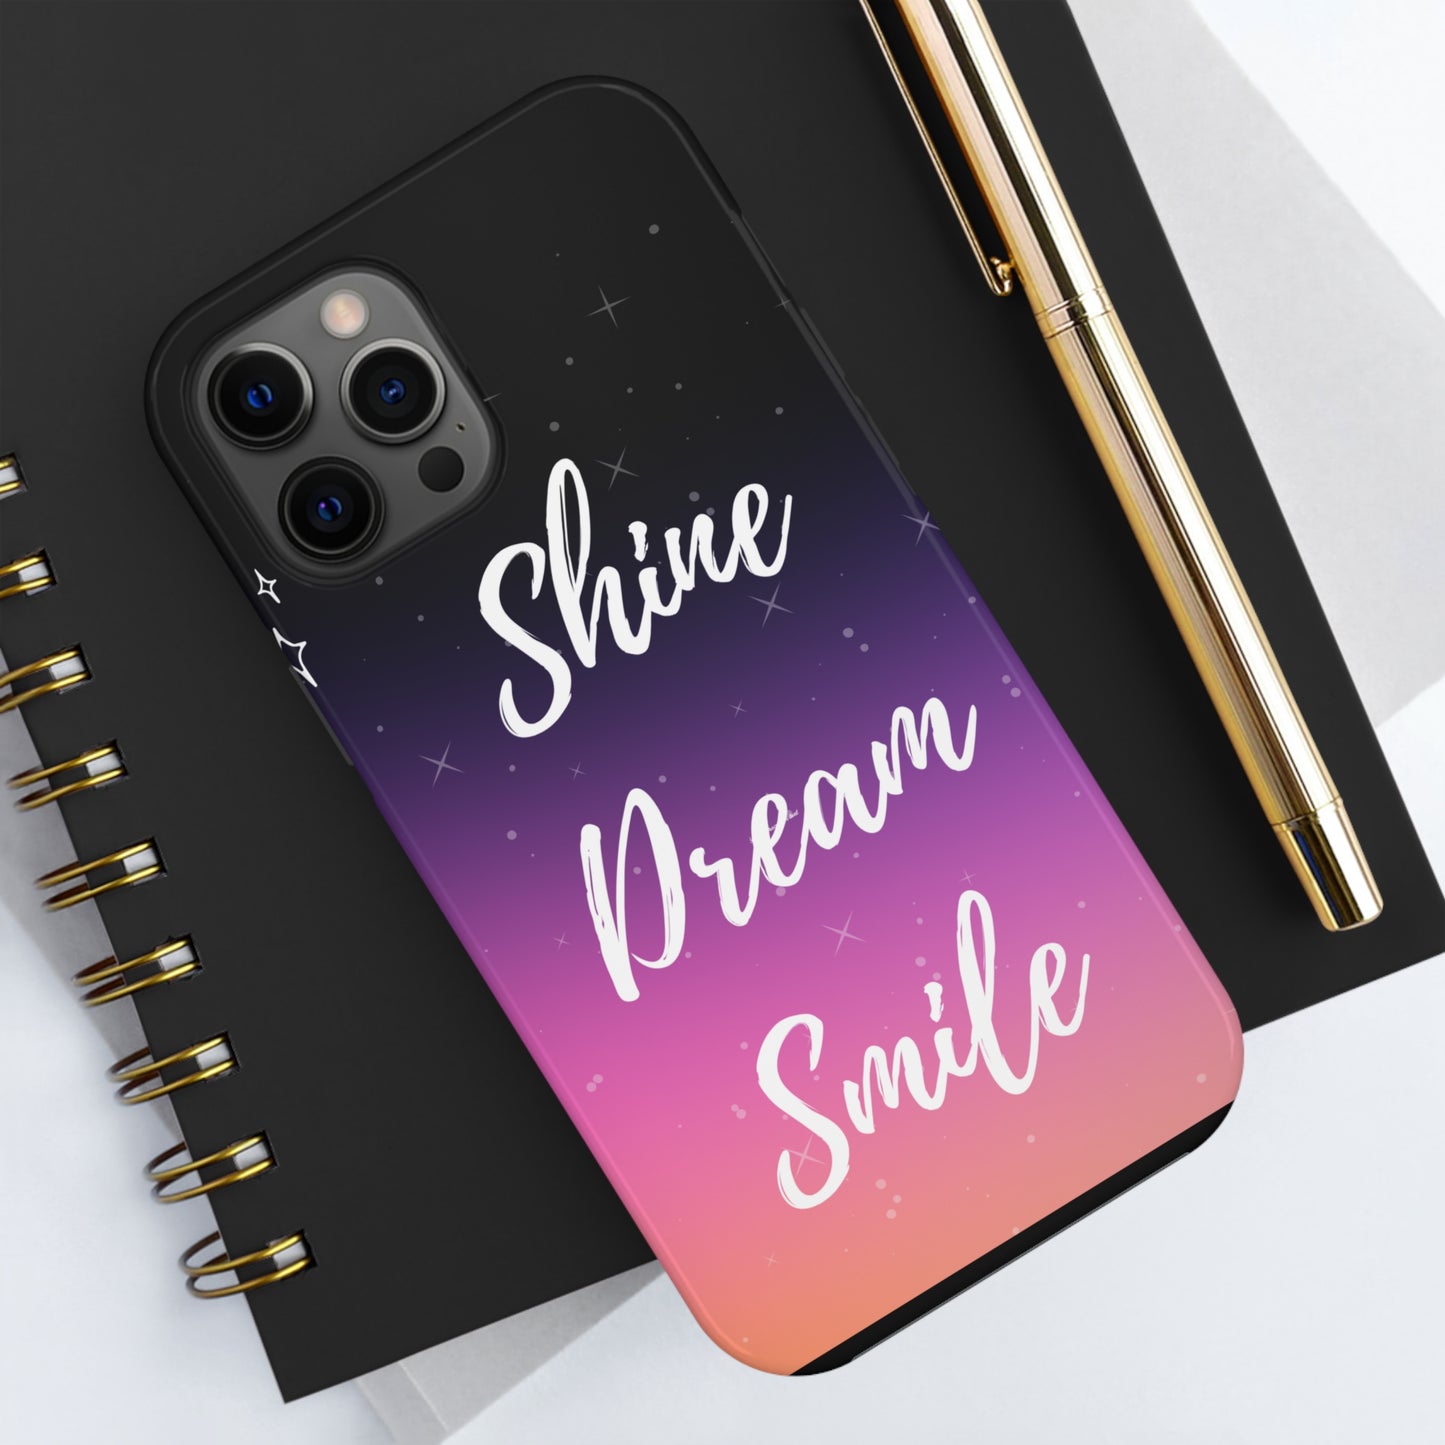 Shine, Dream, Smile Mikrokosmos phone case